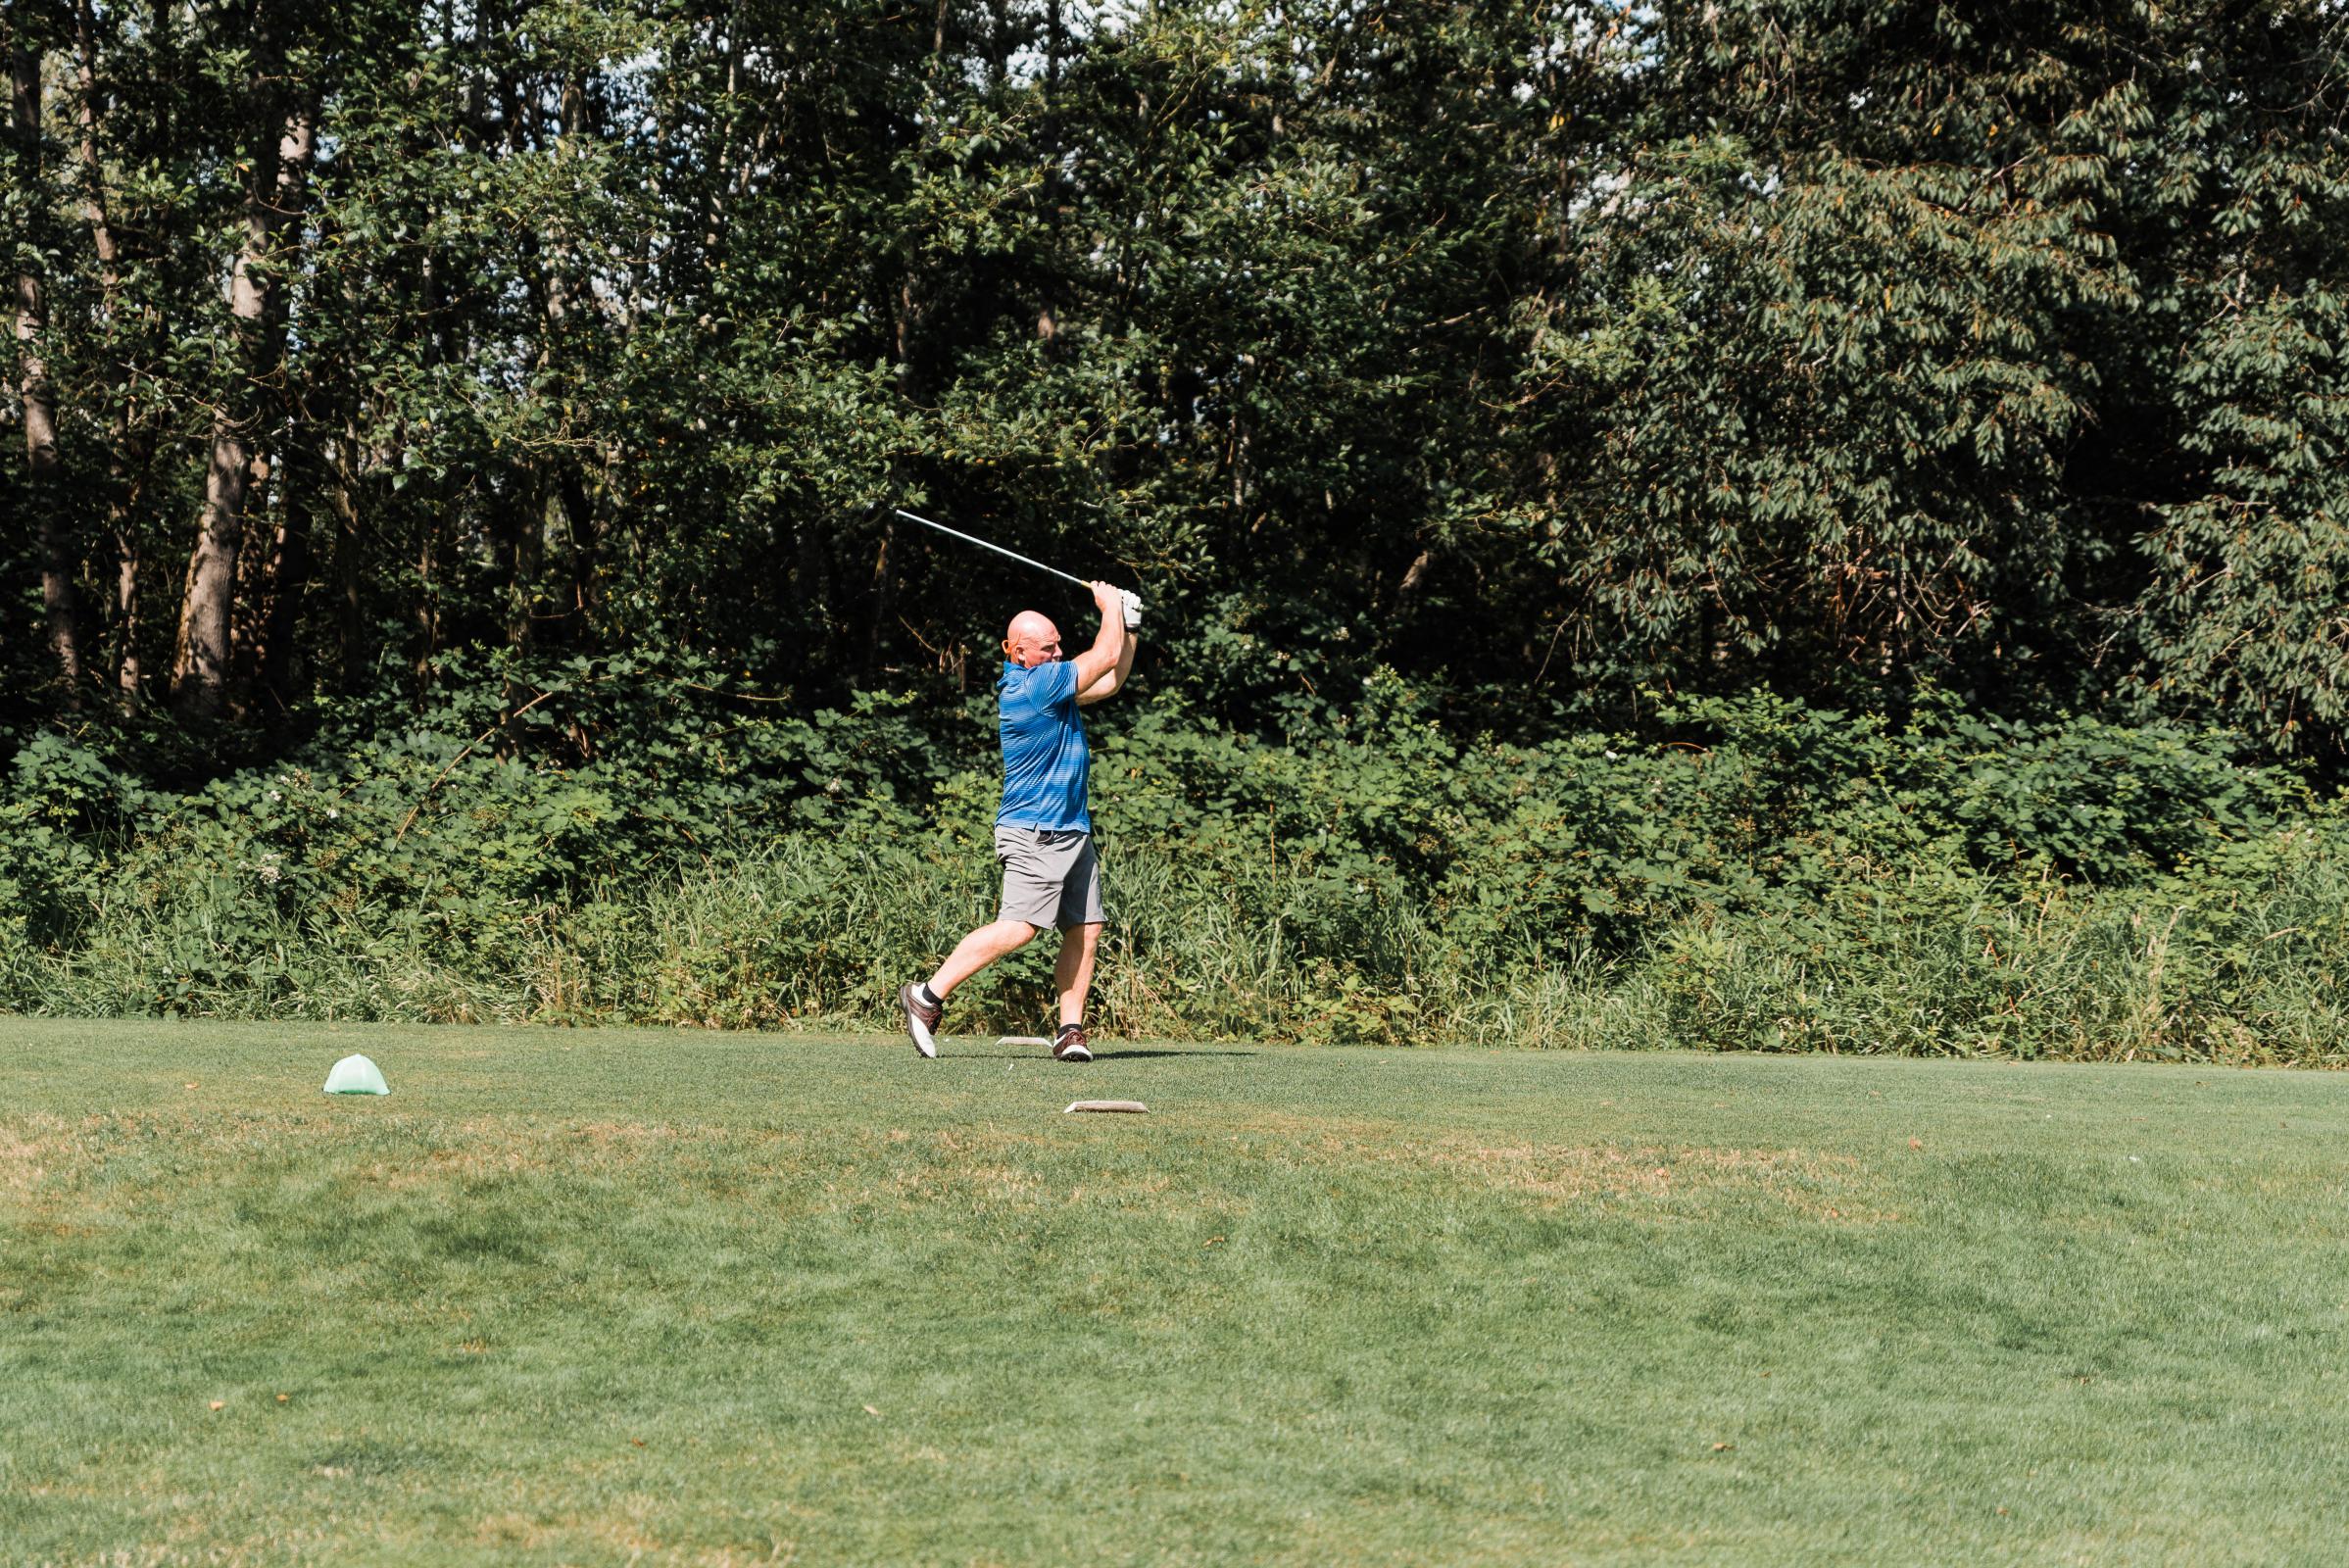 GolfTournament-77's image